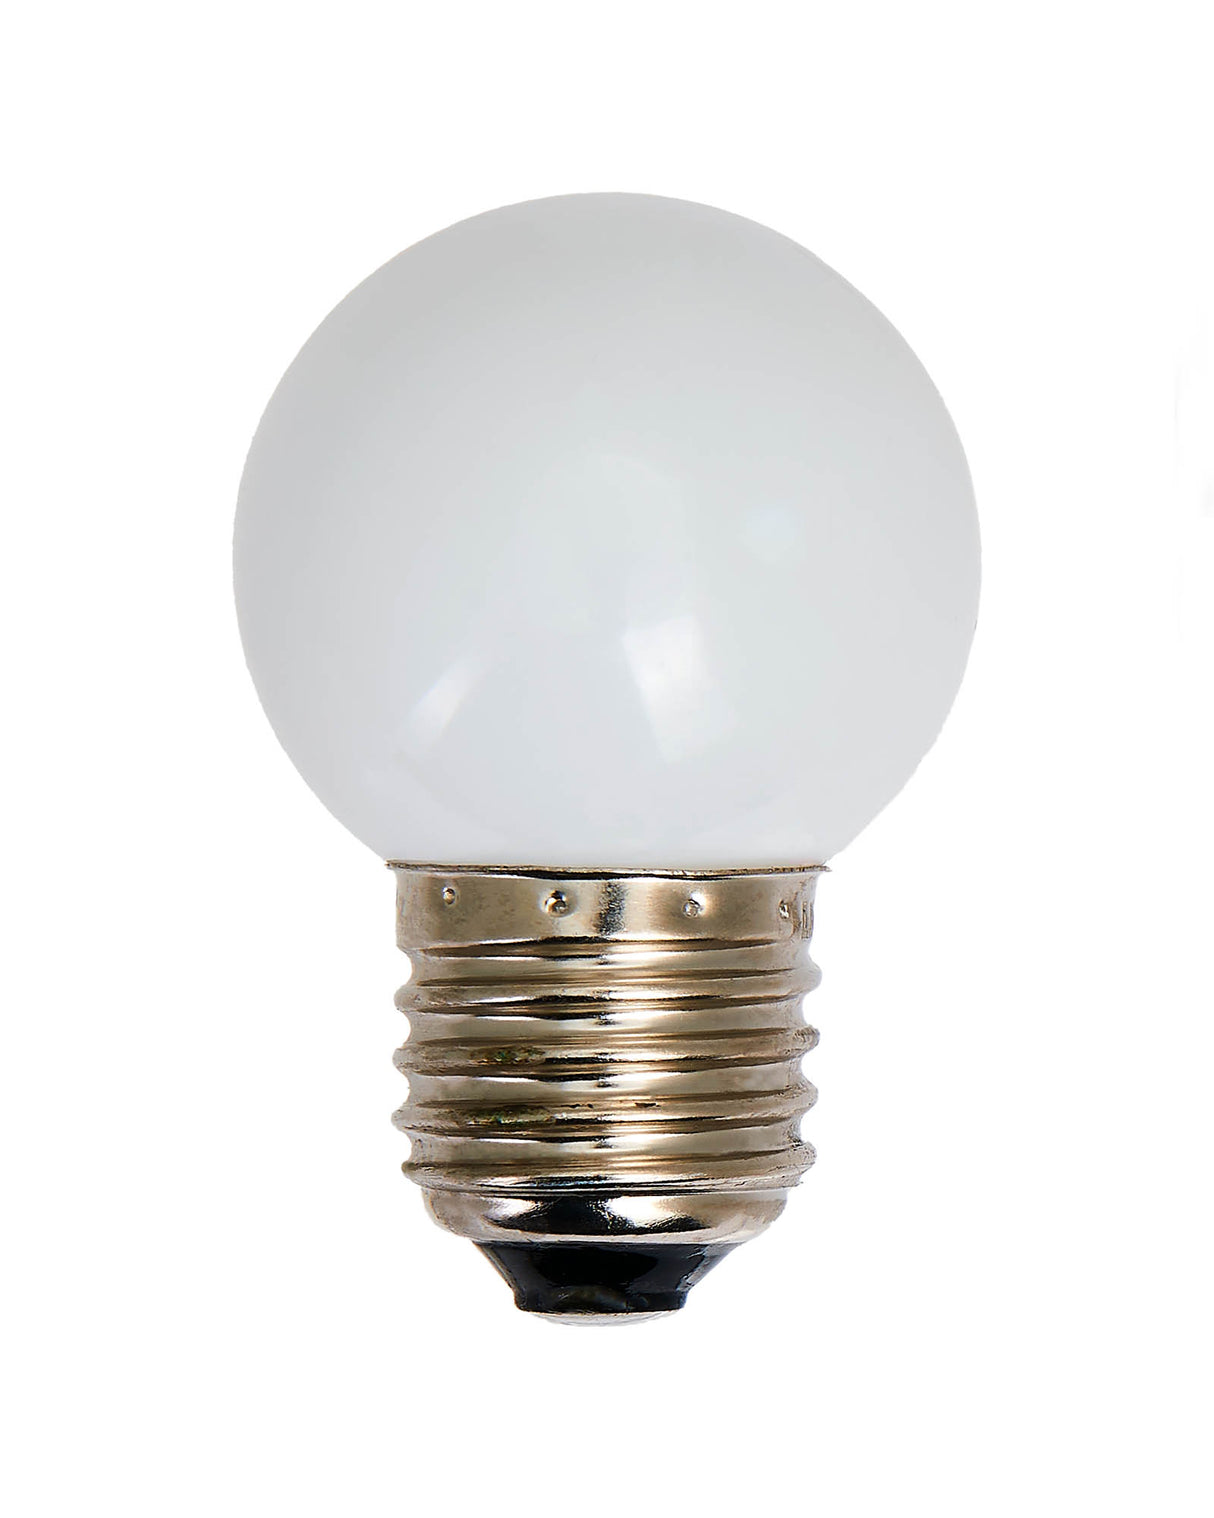 LINK FESTOON 0.6W E27 LED Bulb, Warm White